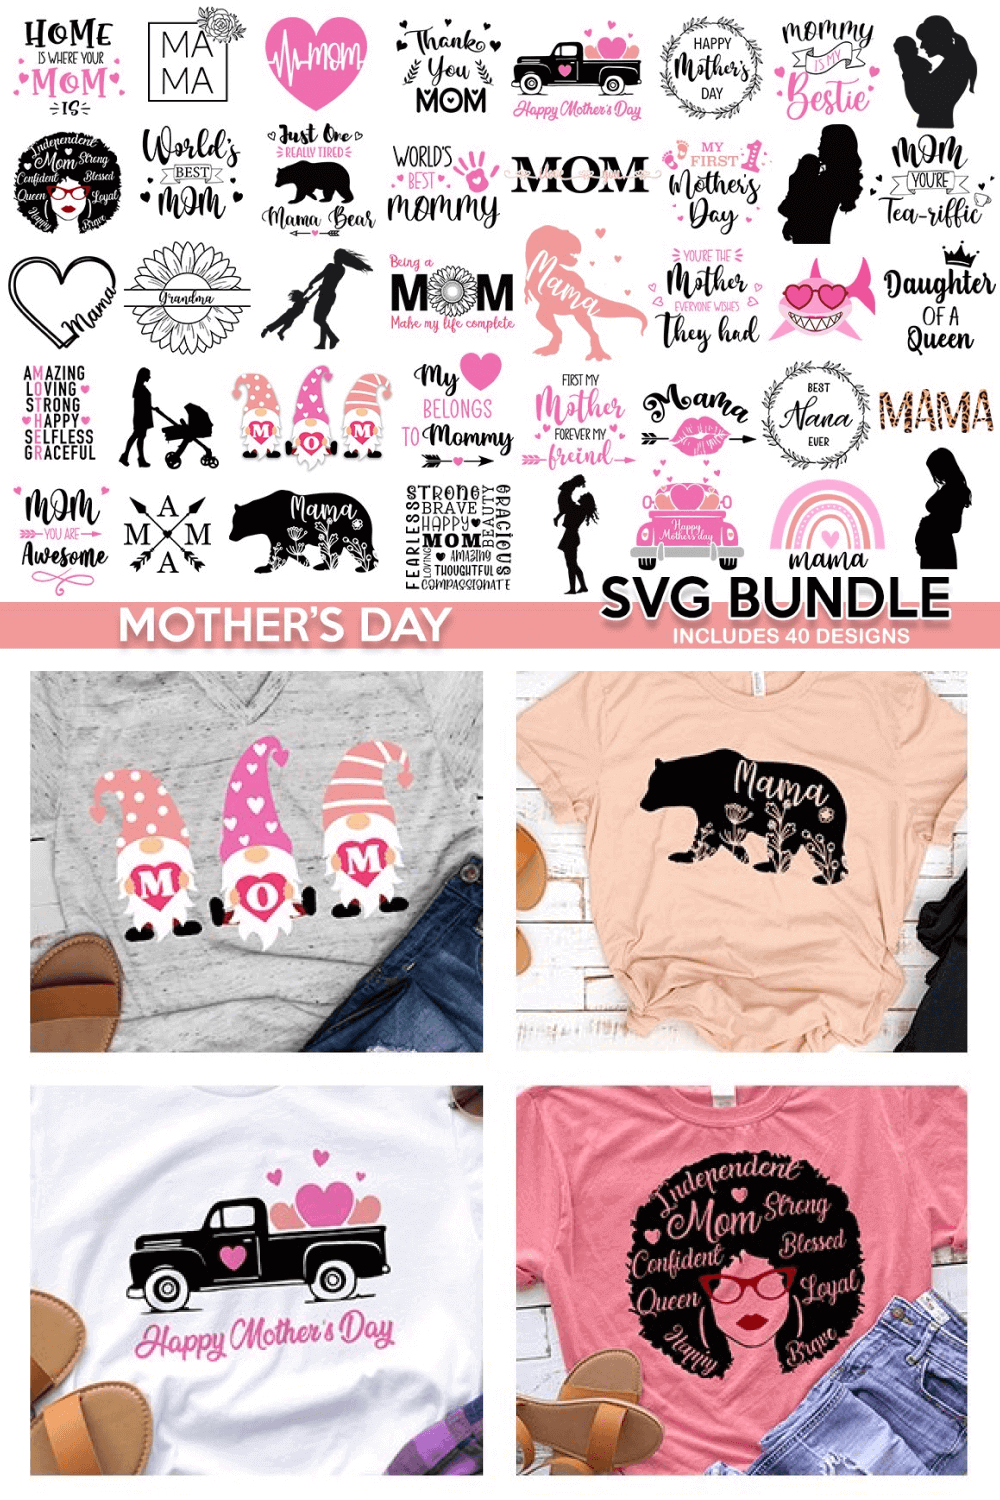 Mama SVG Bundle Includes 40 Designs.